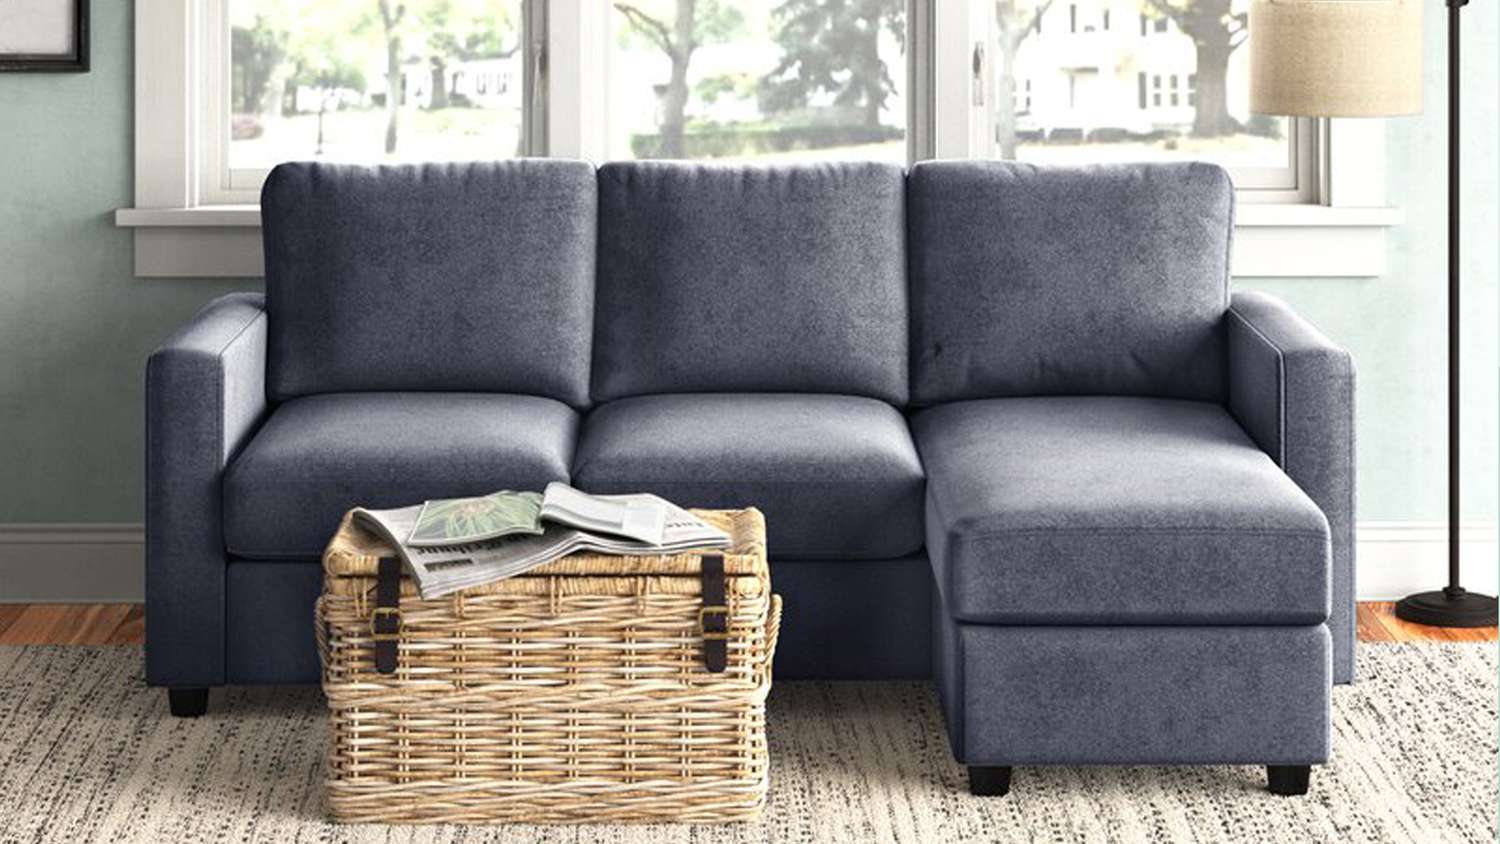 EQsalon APRILLA Chic Stylish Sectional Sofa Couch w/ Sleeper and Storage 108"W 